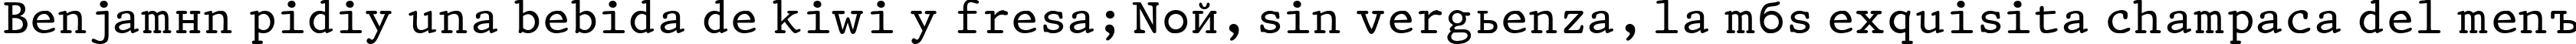 Пример написания шрифтом Prestige Normal текста на испанском